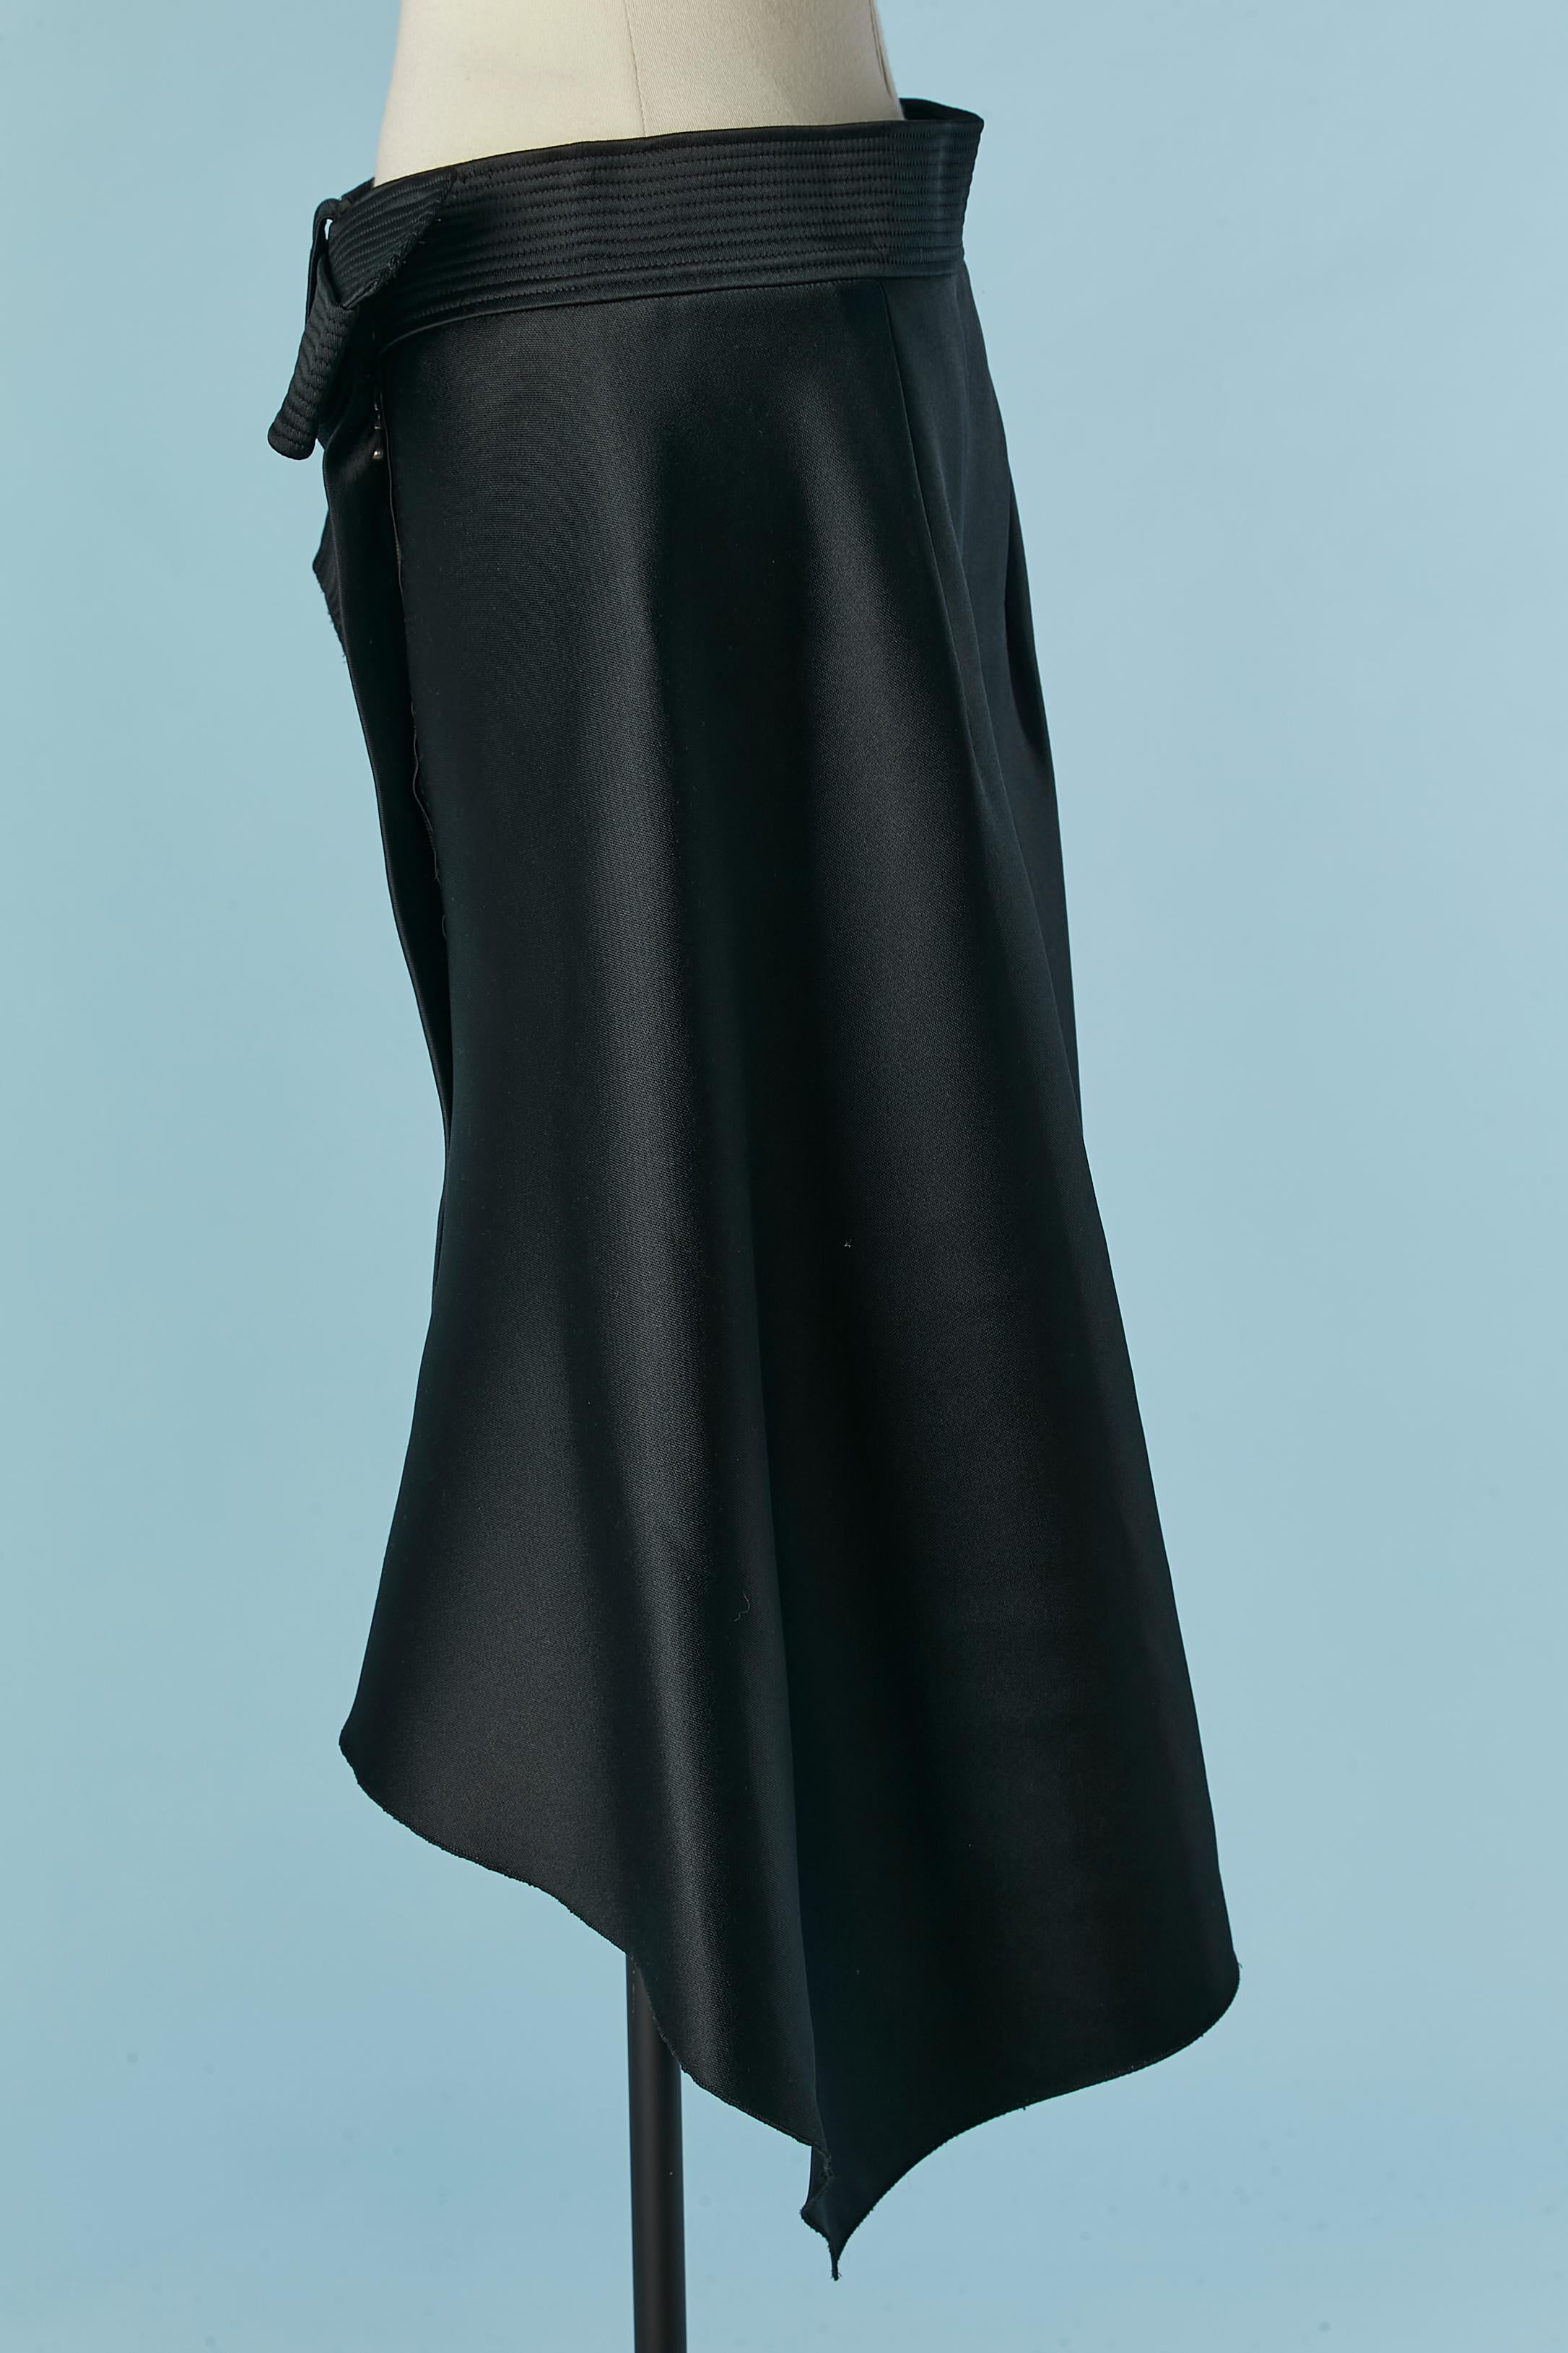 Black asymmetrical wrap skirt with bow Lanvin by Alber Elbaz SS 2013 In Excellent Condition For Sale In Saint-Ouen-Sur-Seine, FR